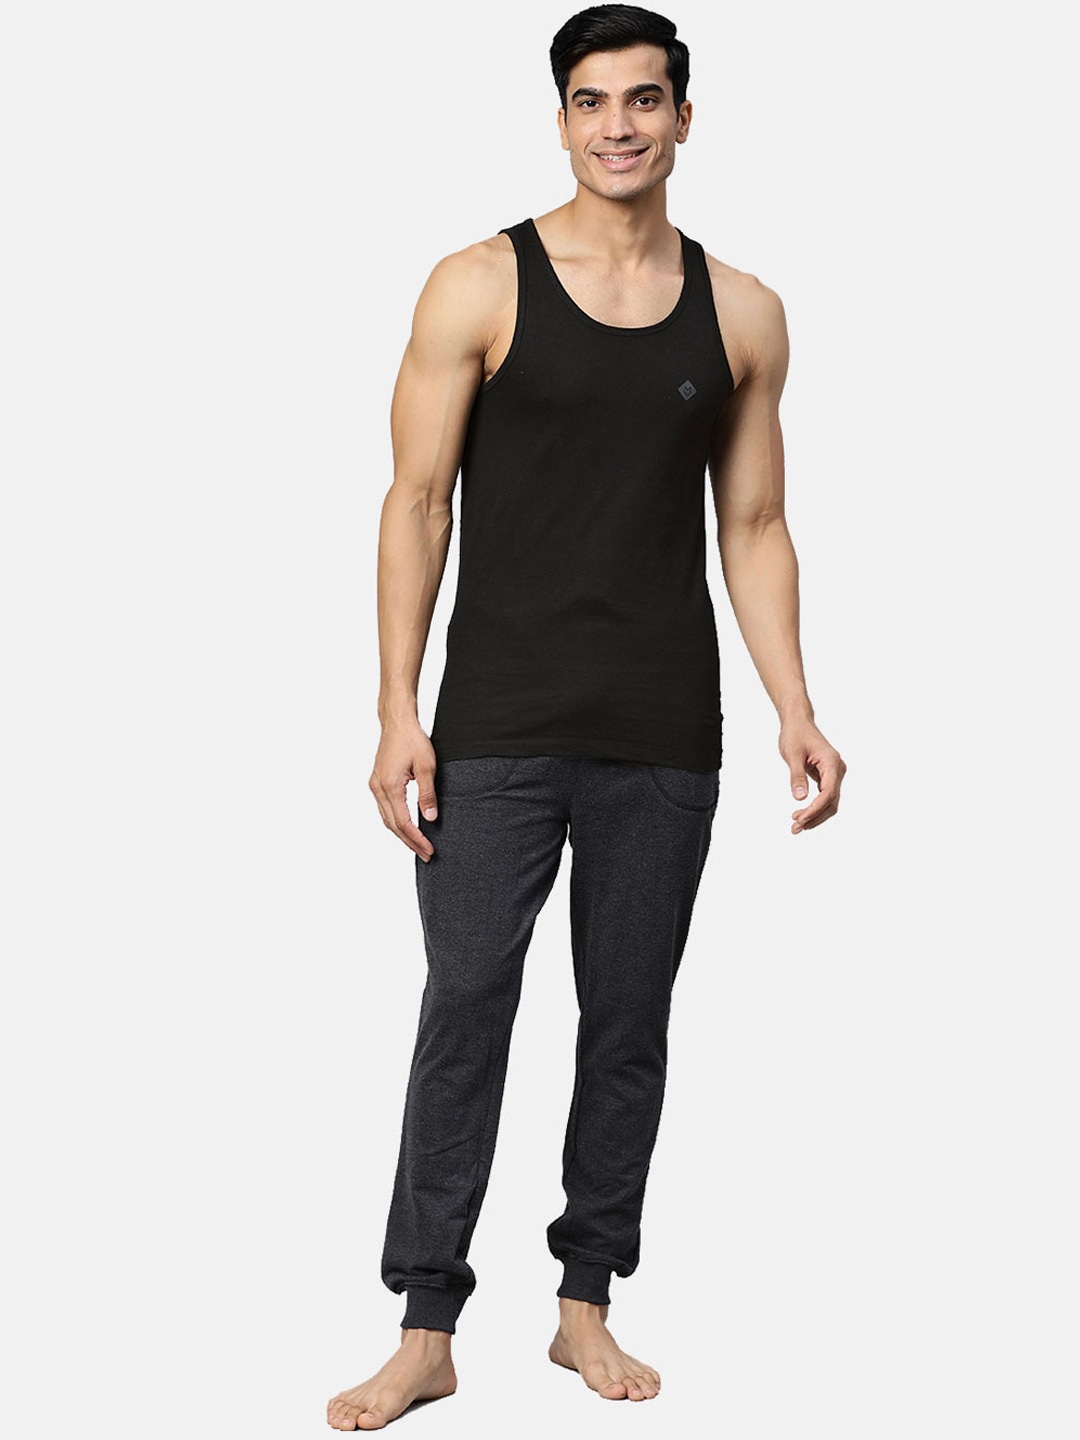 Clothing Innerwear Vests | Almo Wear Men Pack Of 3 Black Solid Slim-Fit Cotton Innerwear Vests - HE56207